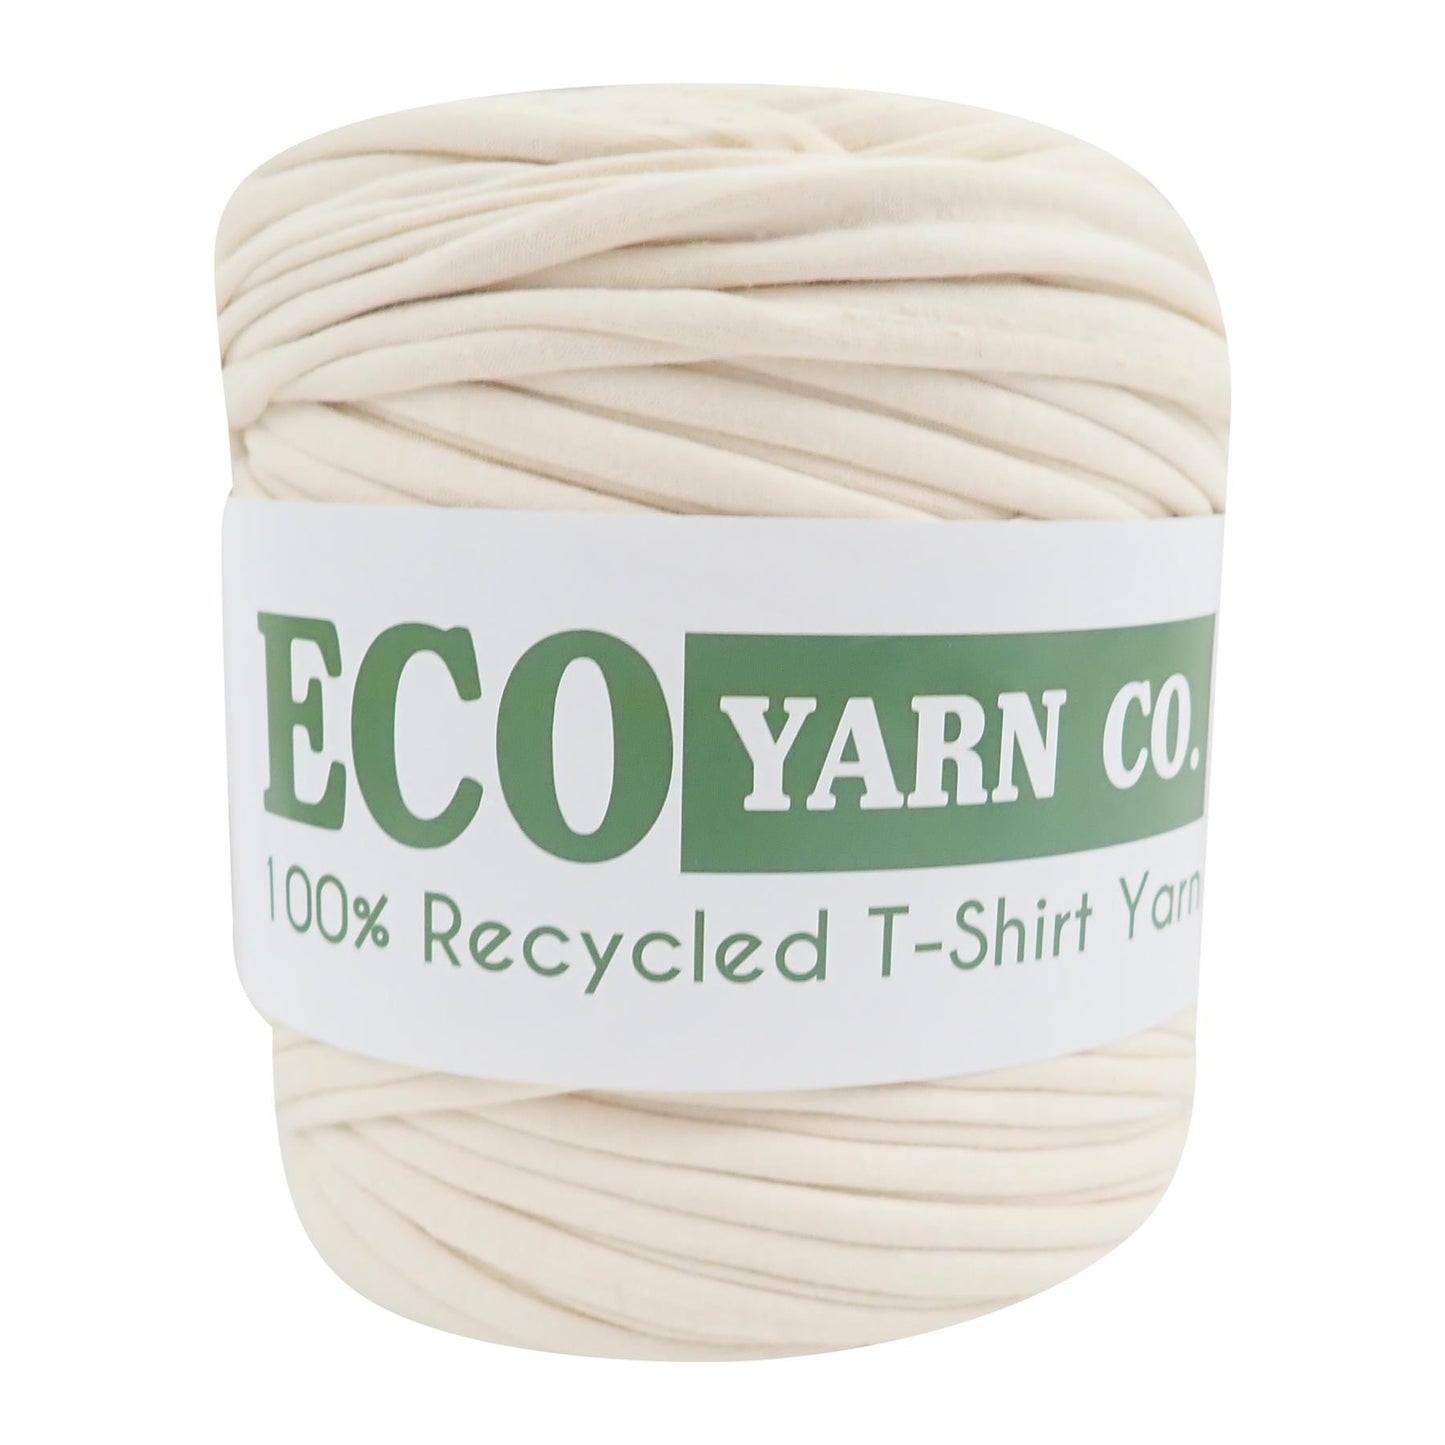 Eco Yarn Co Light Taupe Cotton T-Shirt Yarn - 120M 700g